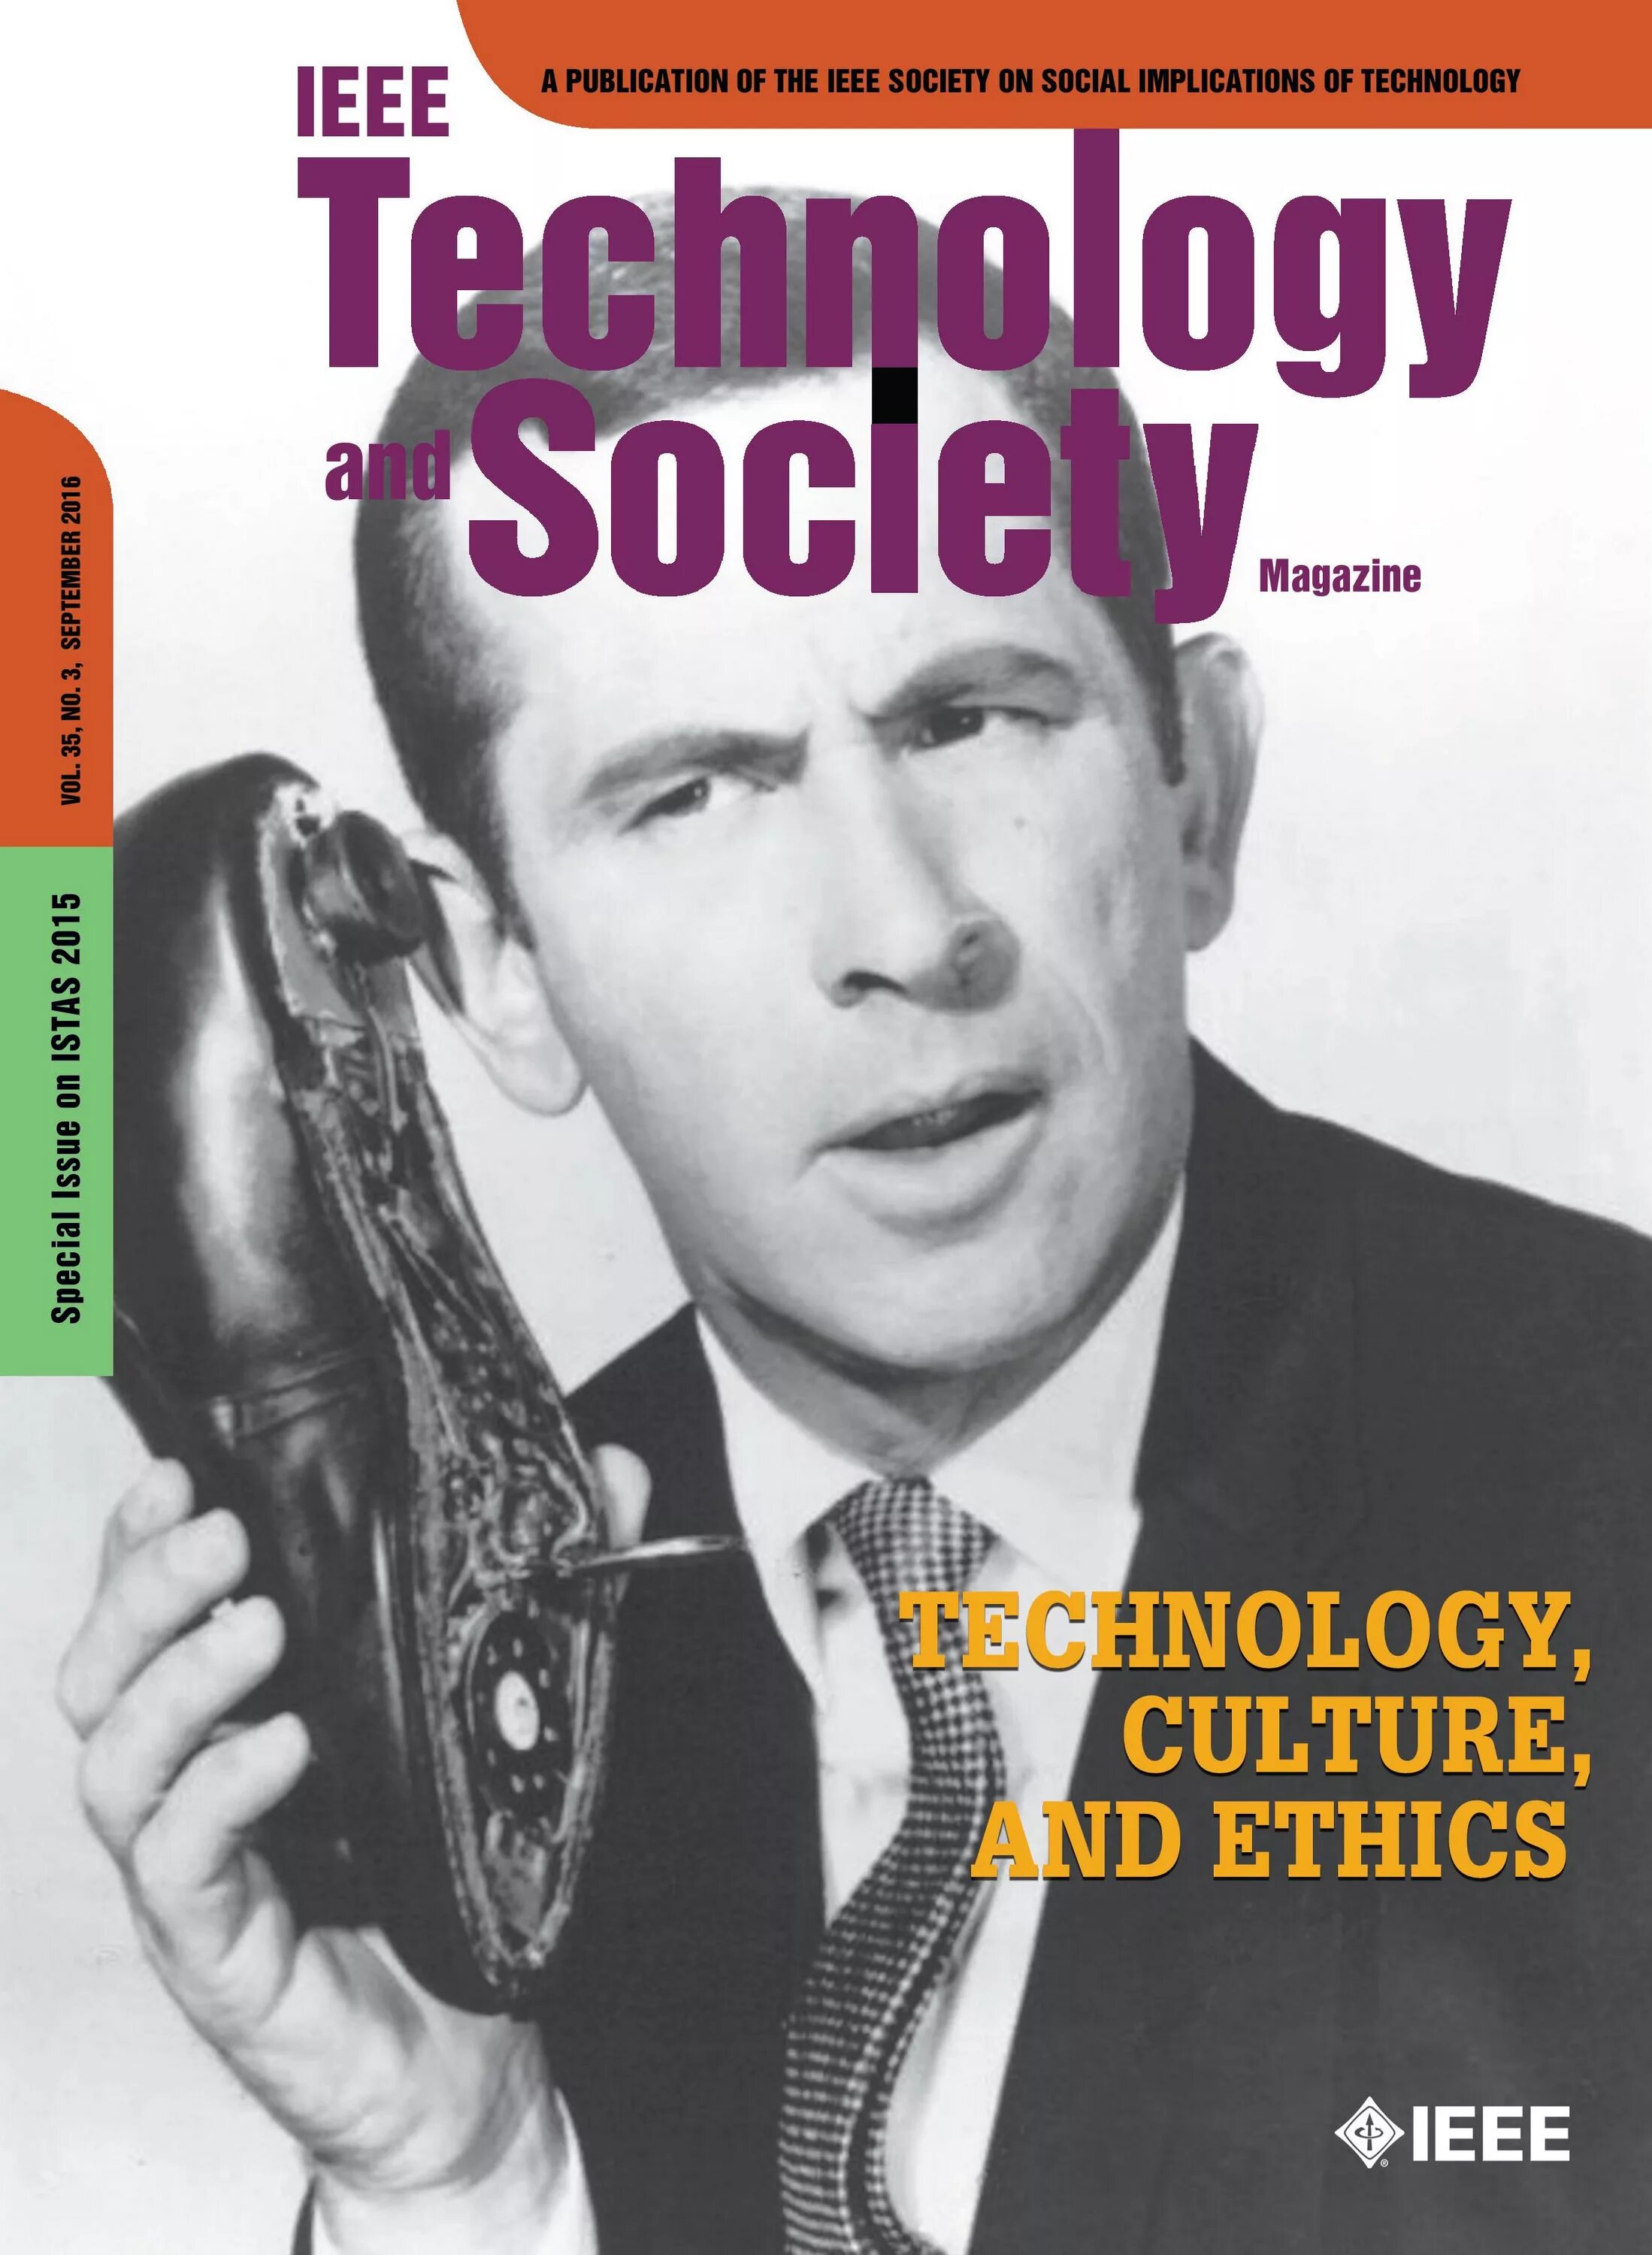 Technology in Society журнал. Журнал технологии. Cover Magazine Technology. Журнал Технолоджис.